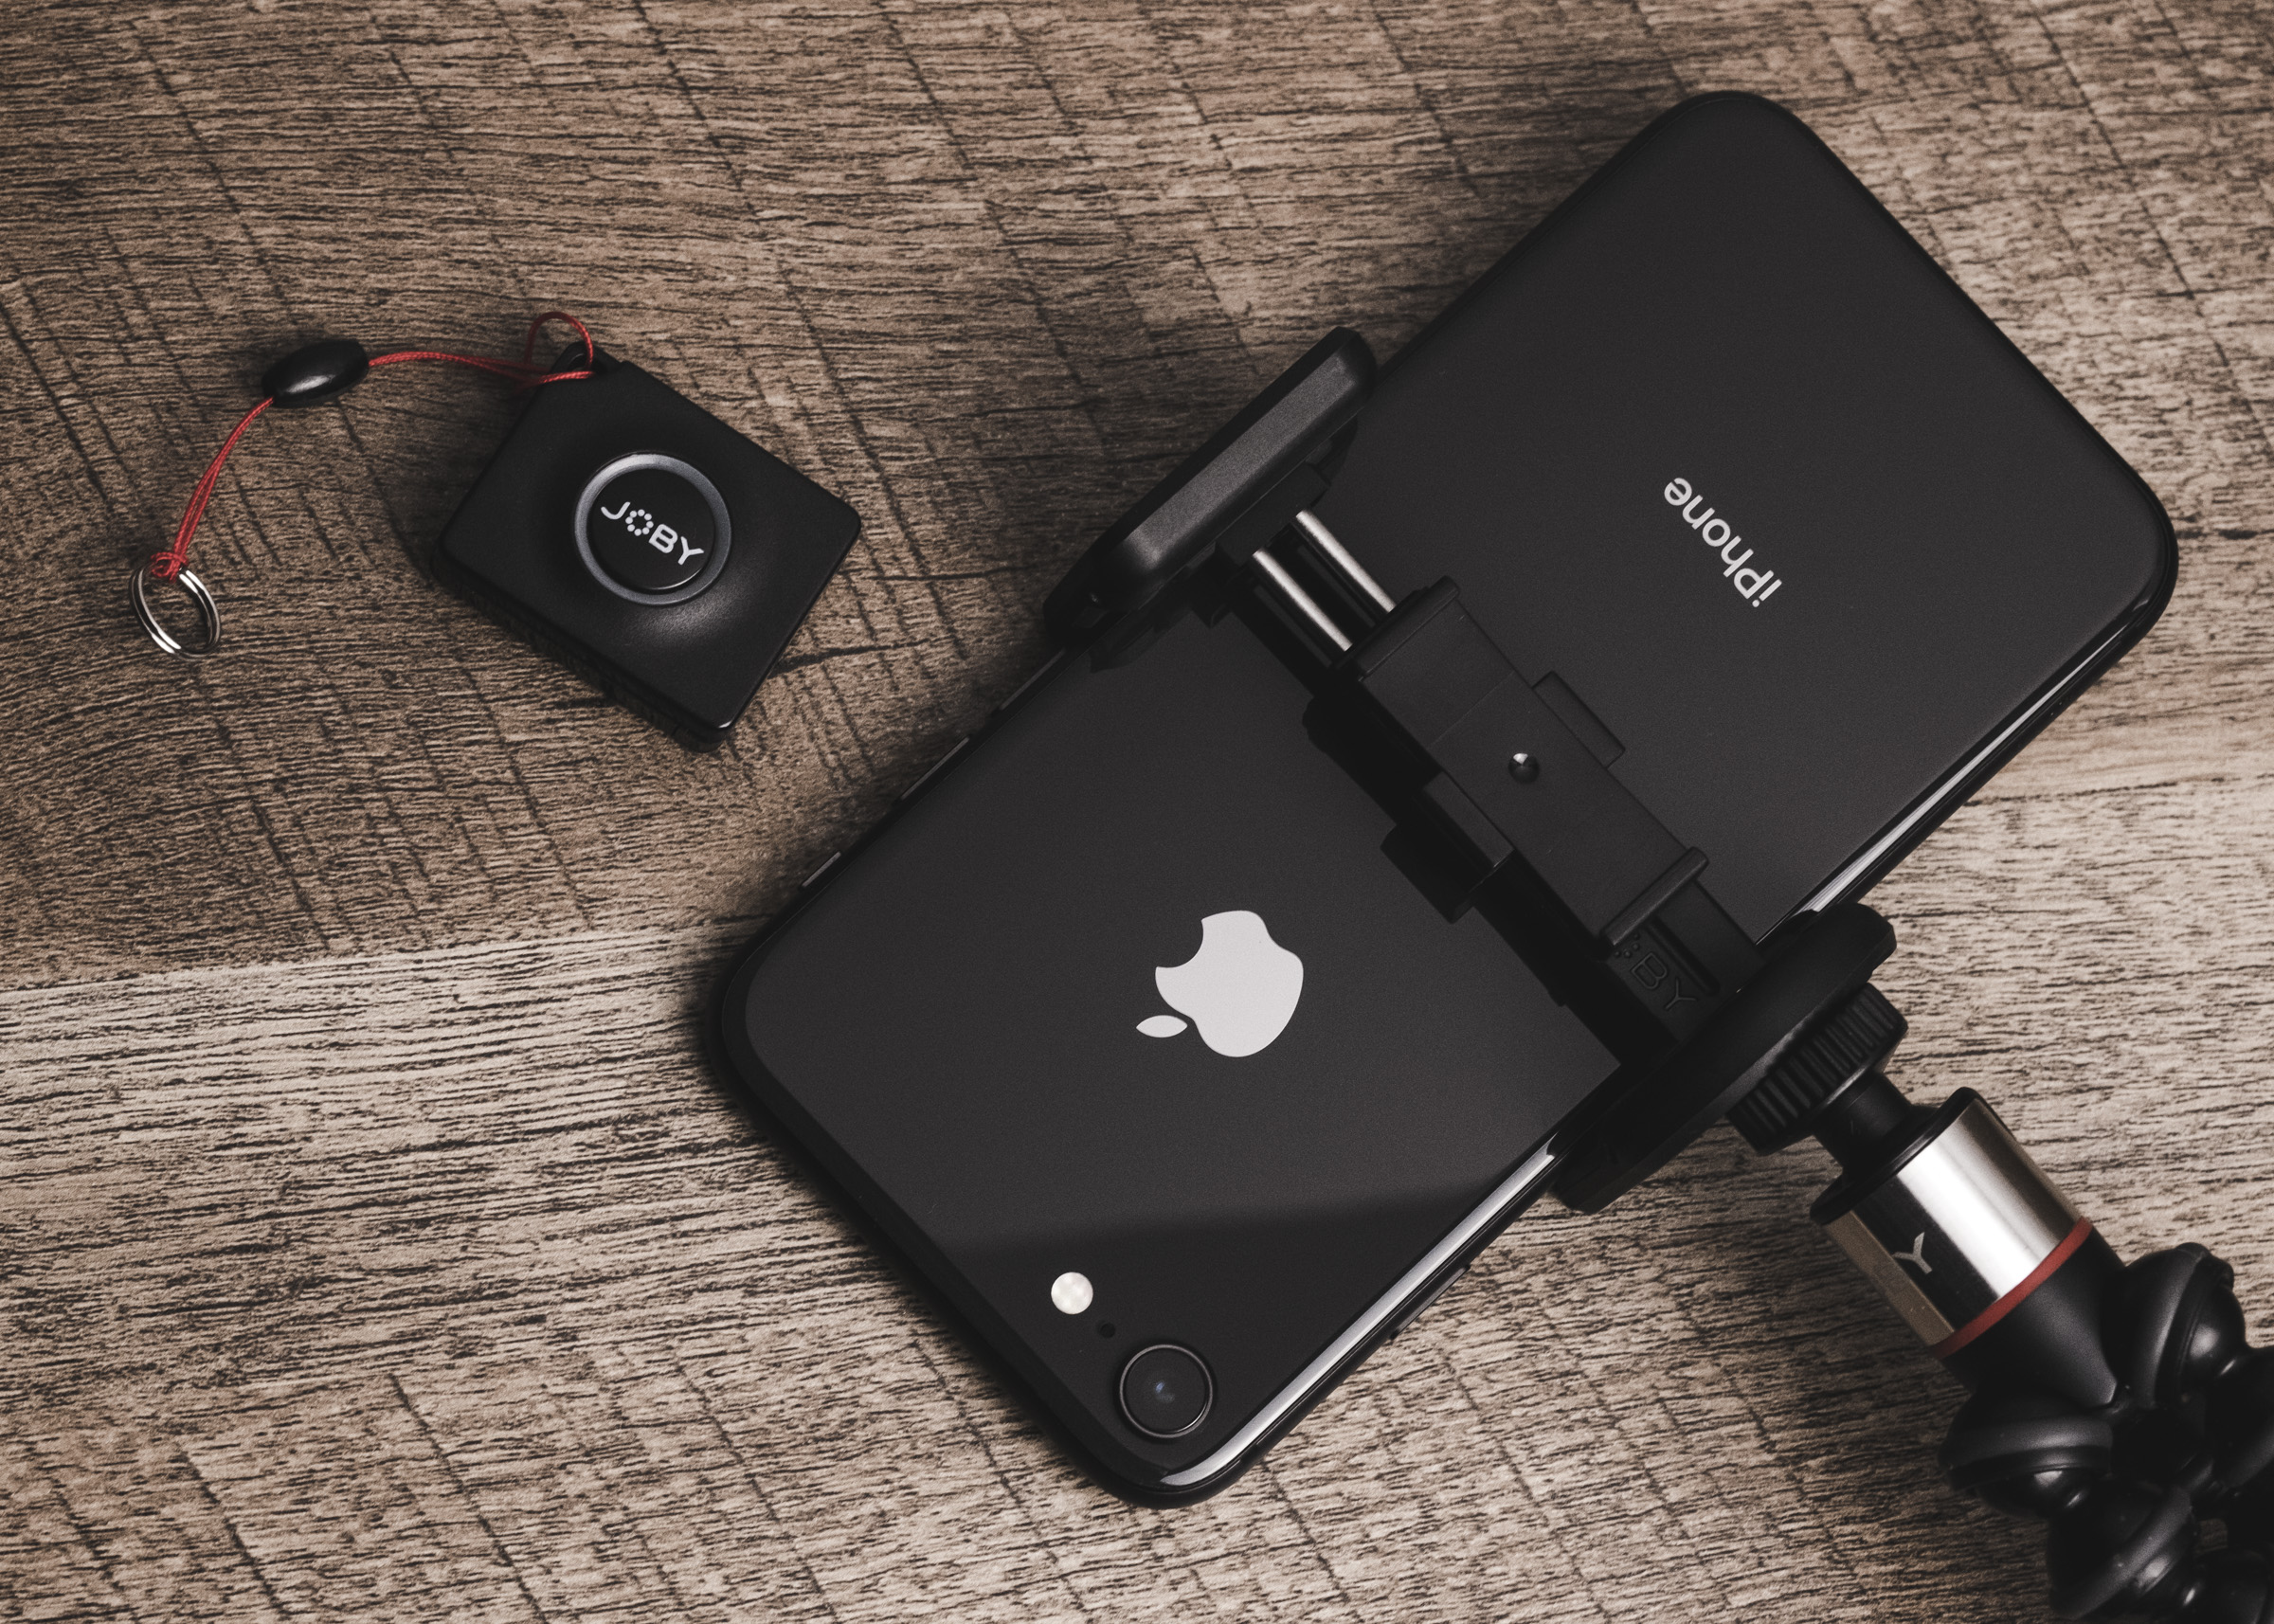 Impulse: Bluetooth remote camera control for iPhone & more